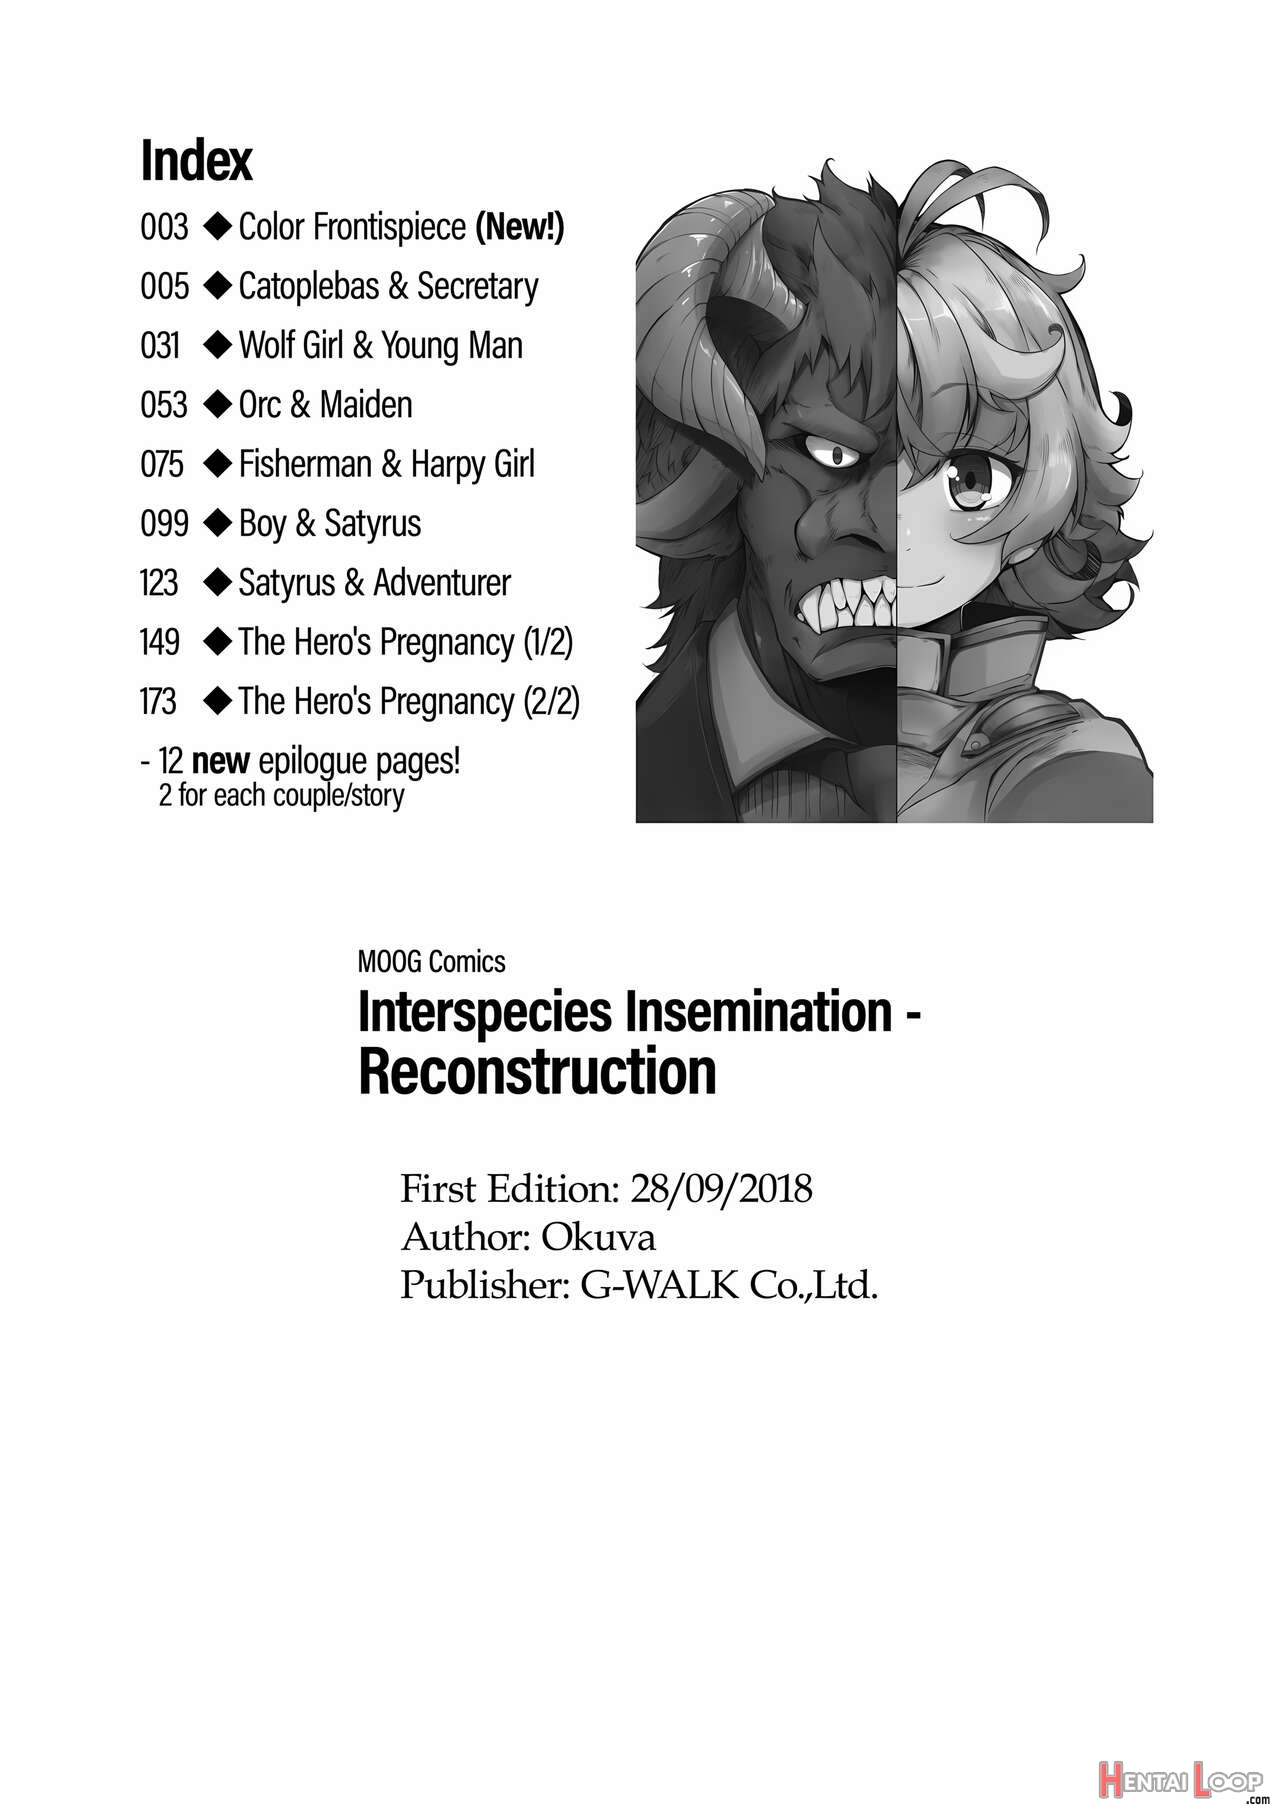 Reconstruction!? Interspecies Insemination page 193